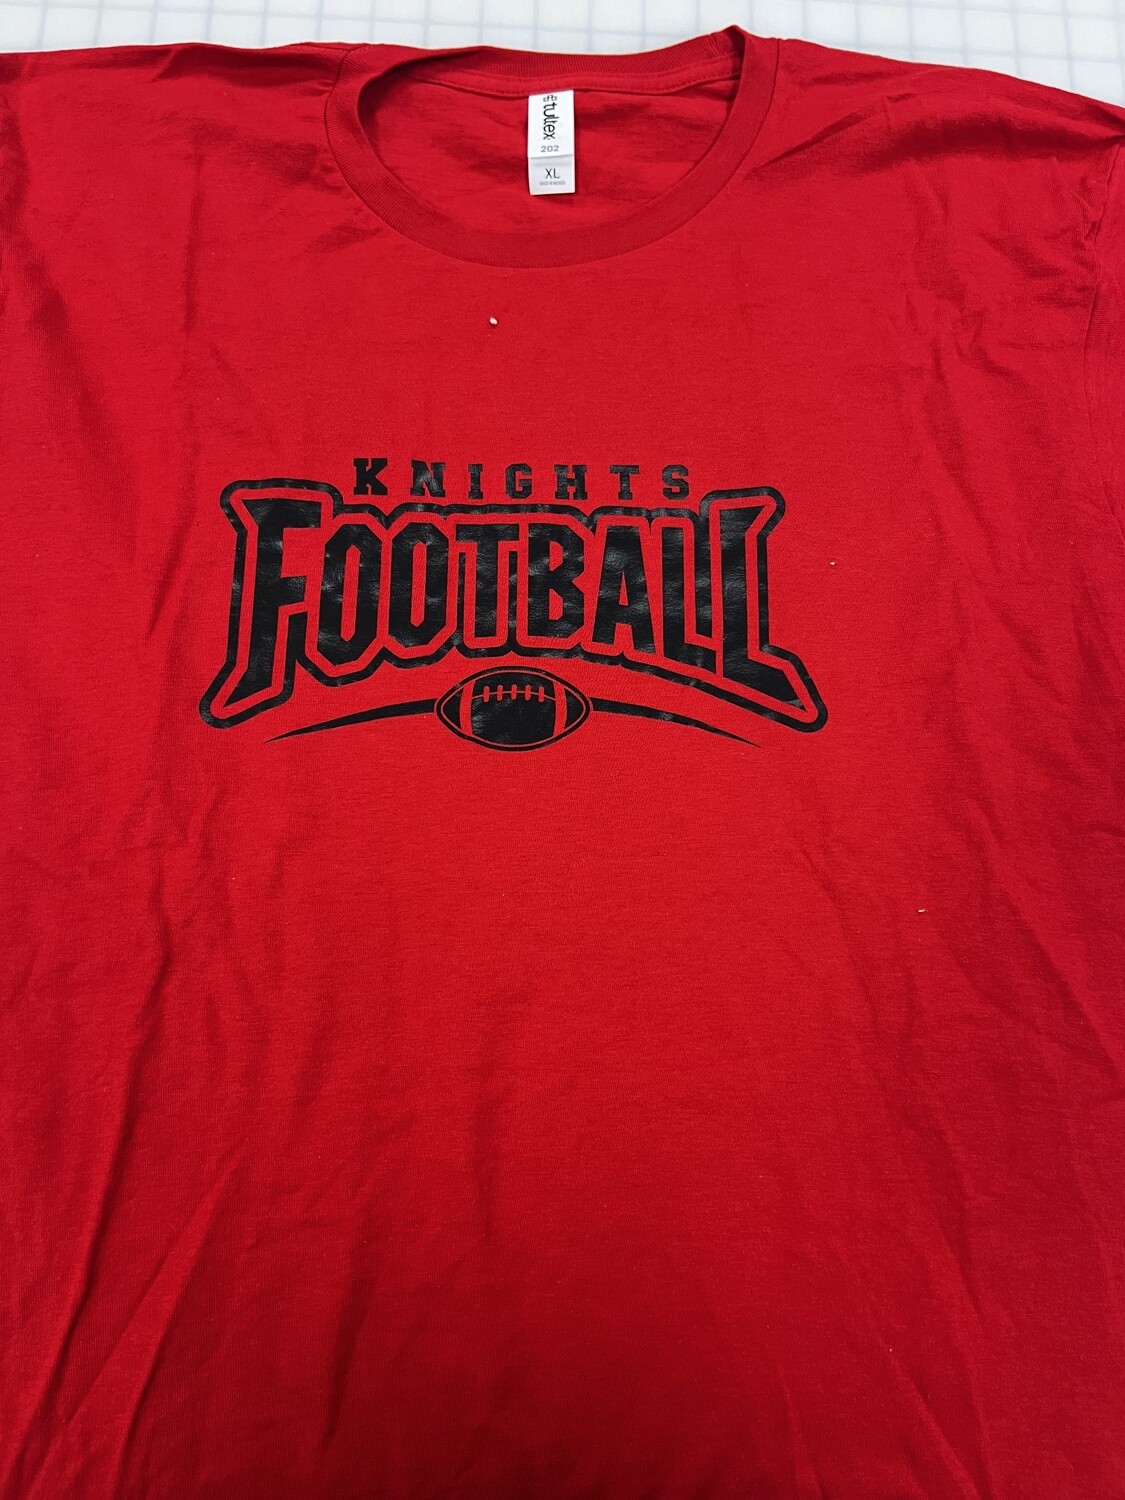 (XL) Knights Football - Short Sleeve Red